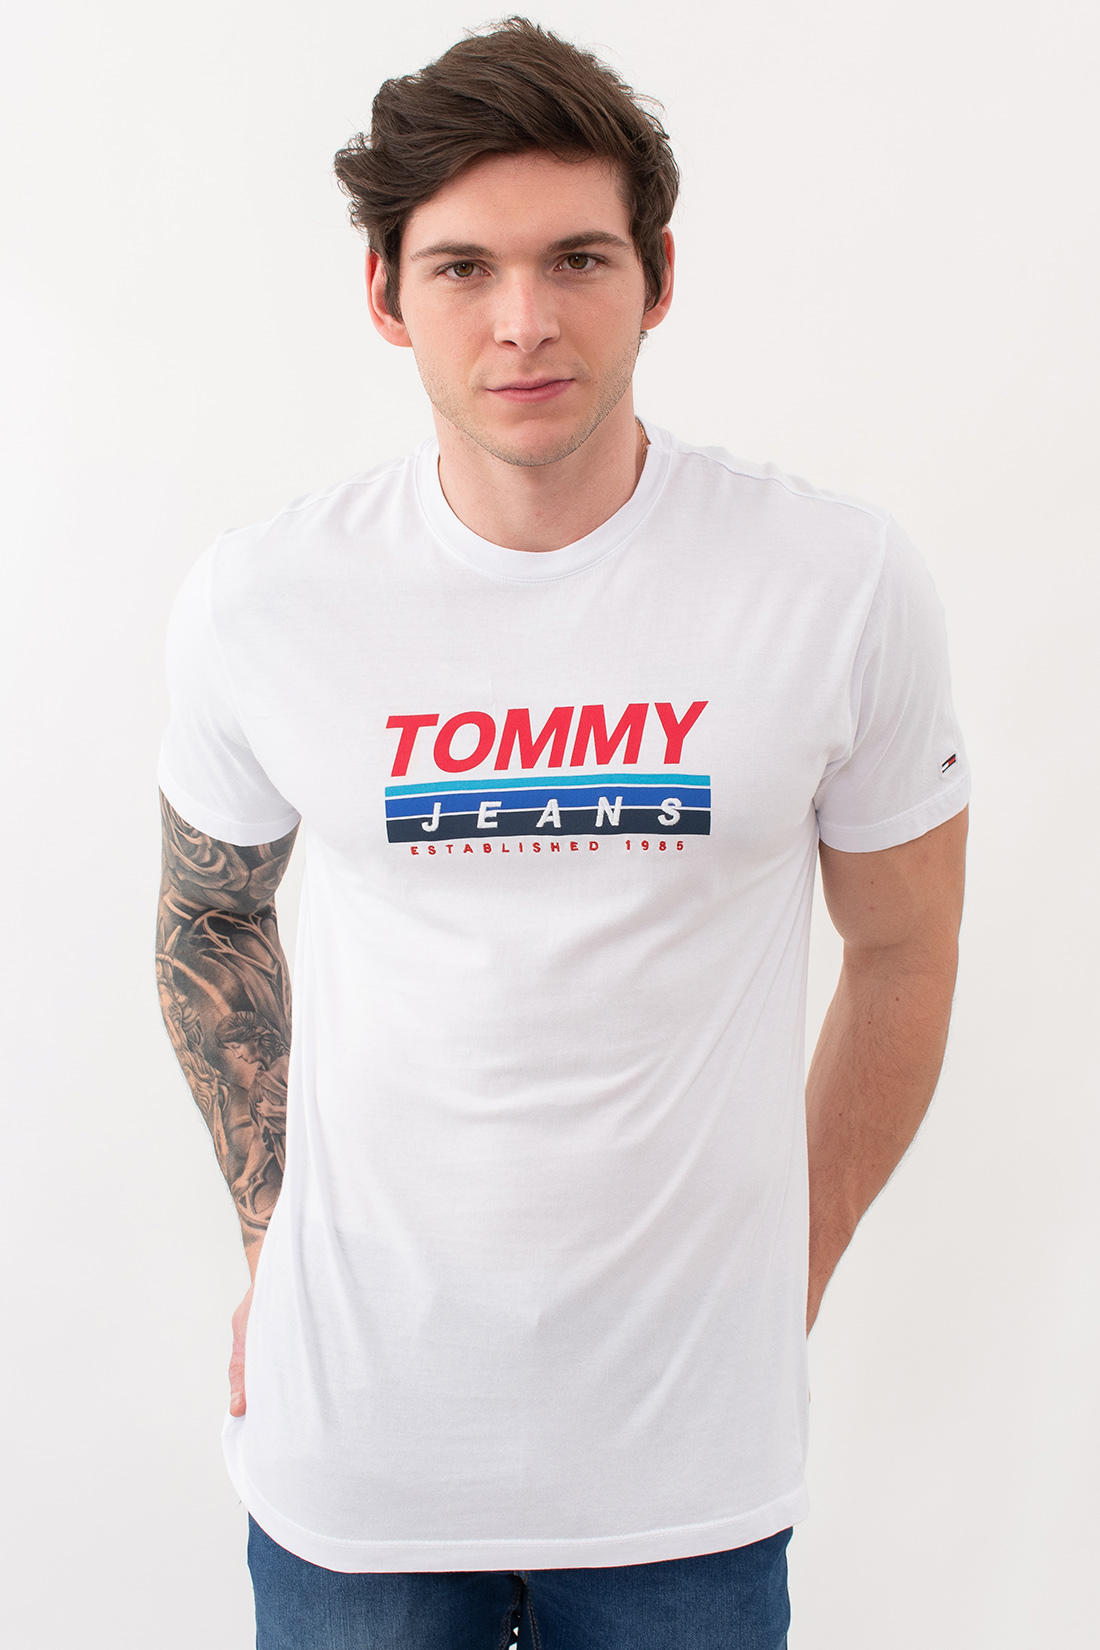 Camiseta Mc Tommy Hilfiger Established